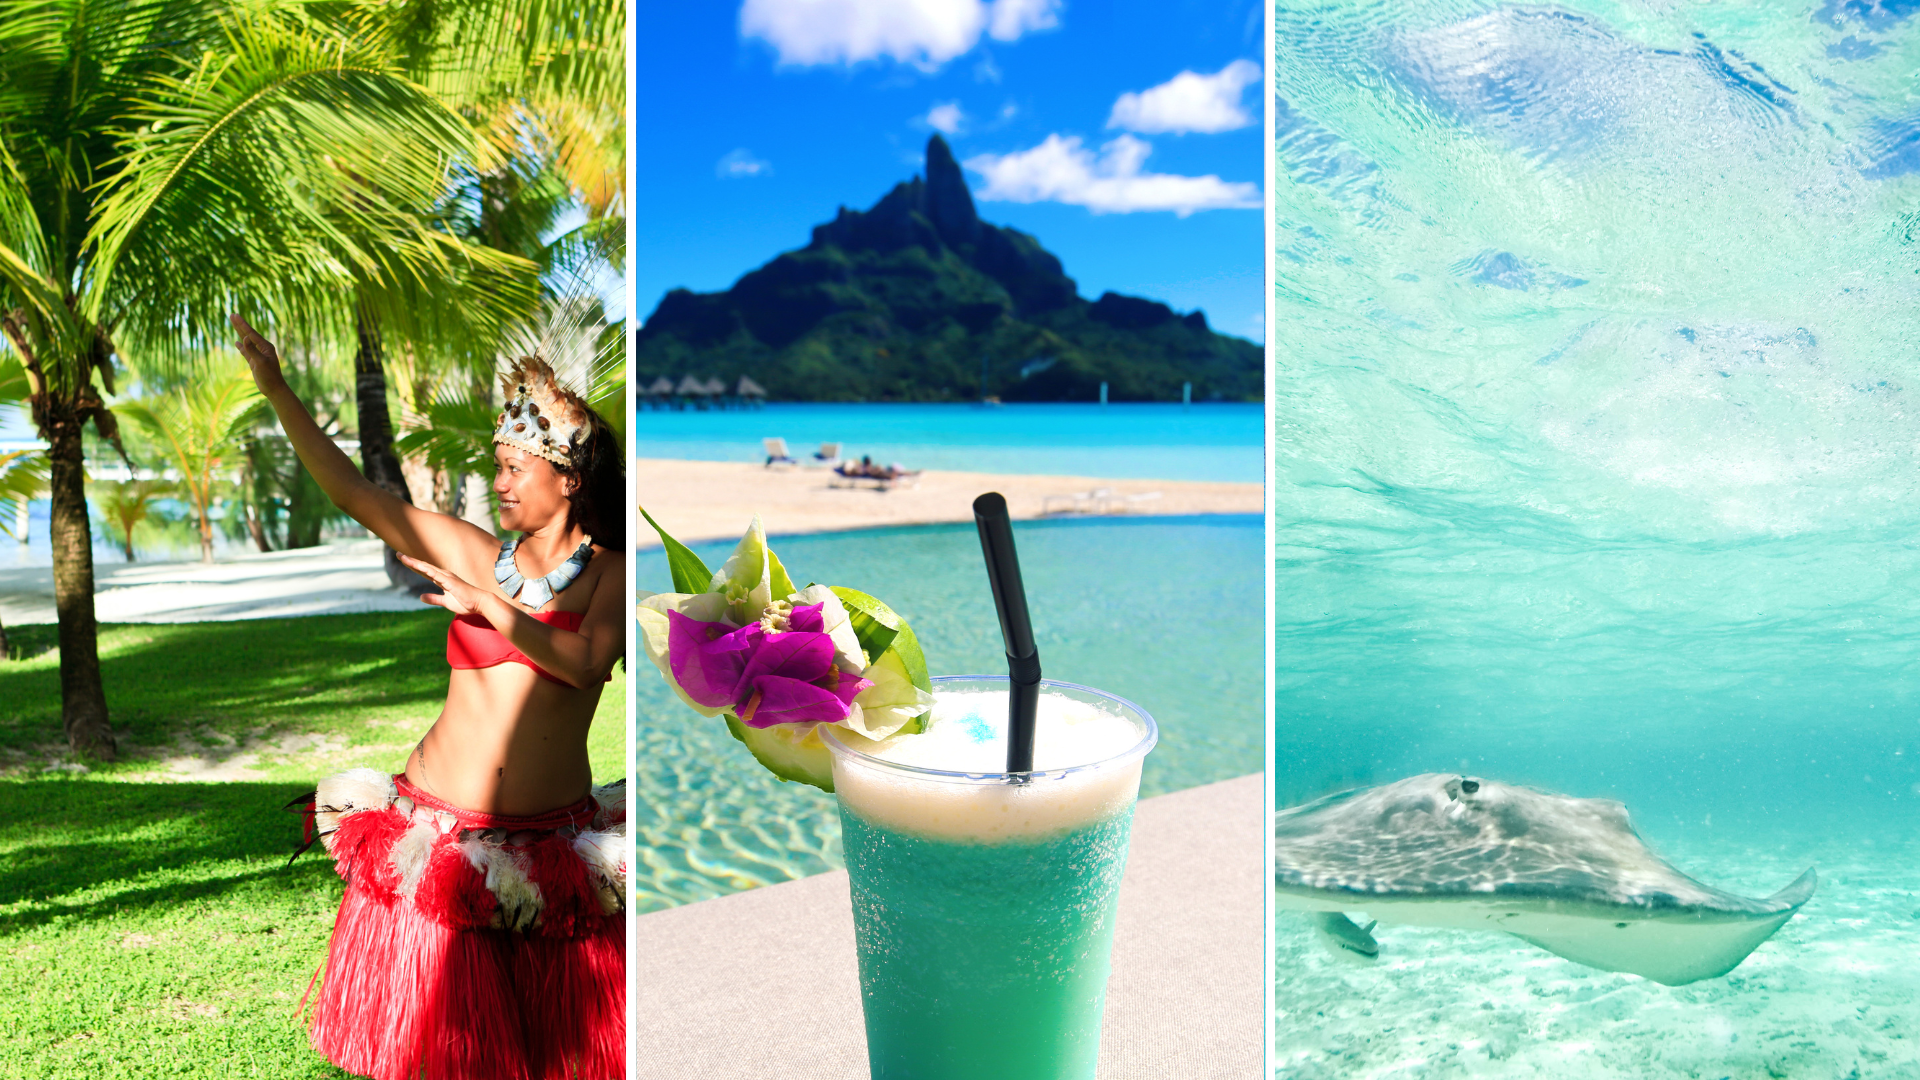 Pictures of Tahiti